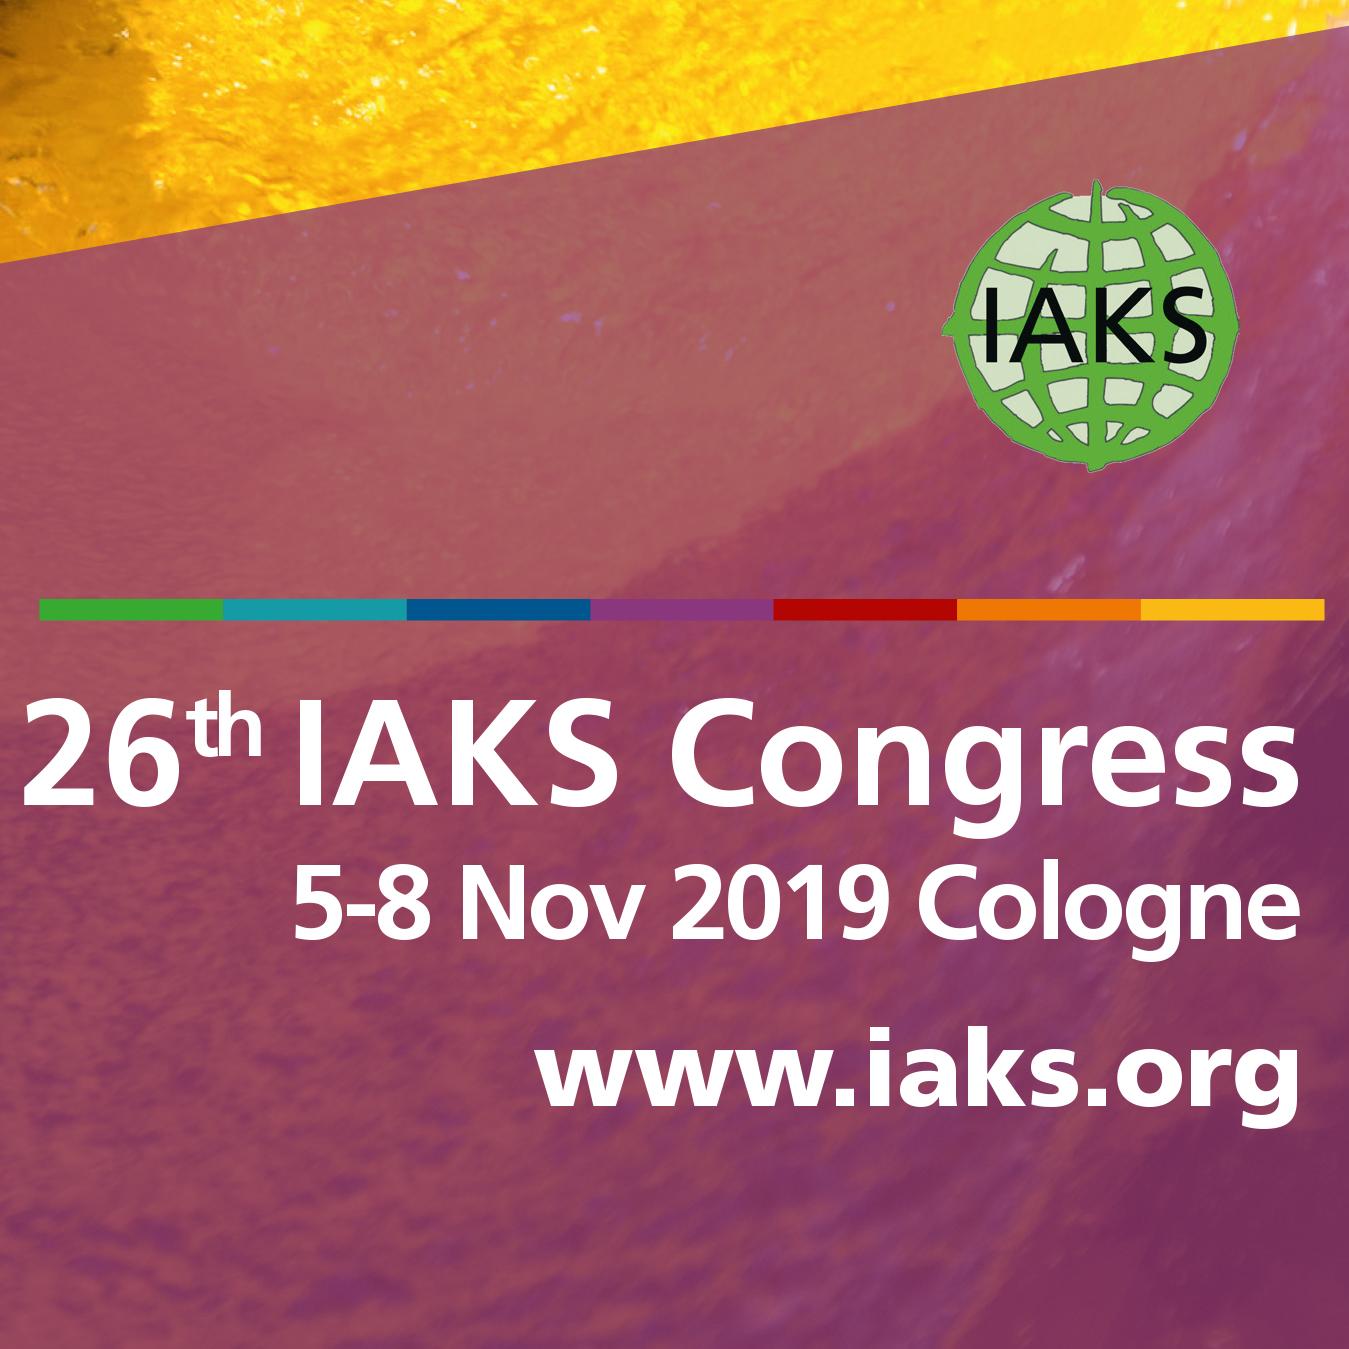 26 IAKS Congress,5-8 November 2019 in Cologne